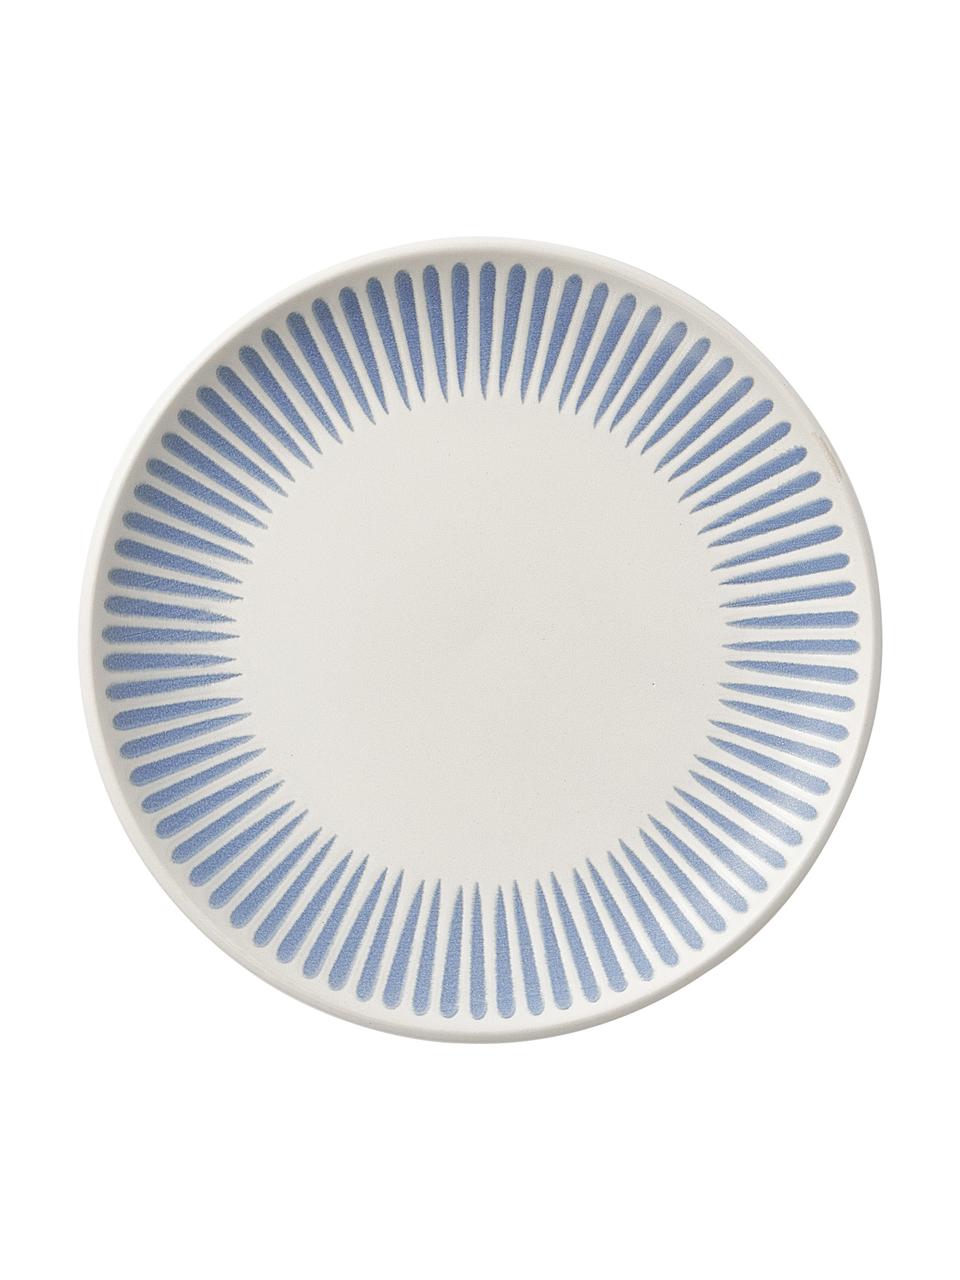 Ontbijtborden Zabelle met streepversiering, 4 stuks, Keramiek, Crèmewit, blauw, Ø 23 x H 3 cm